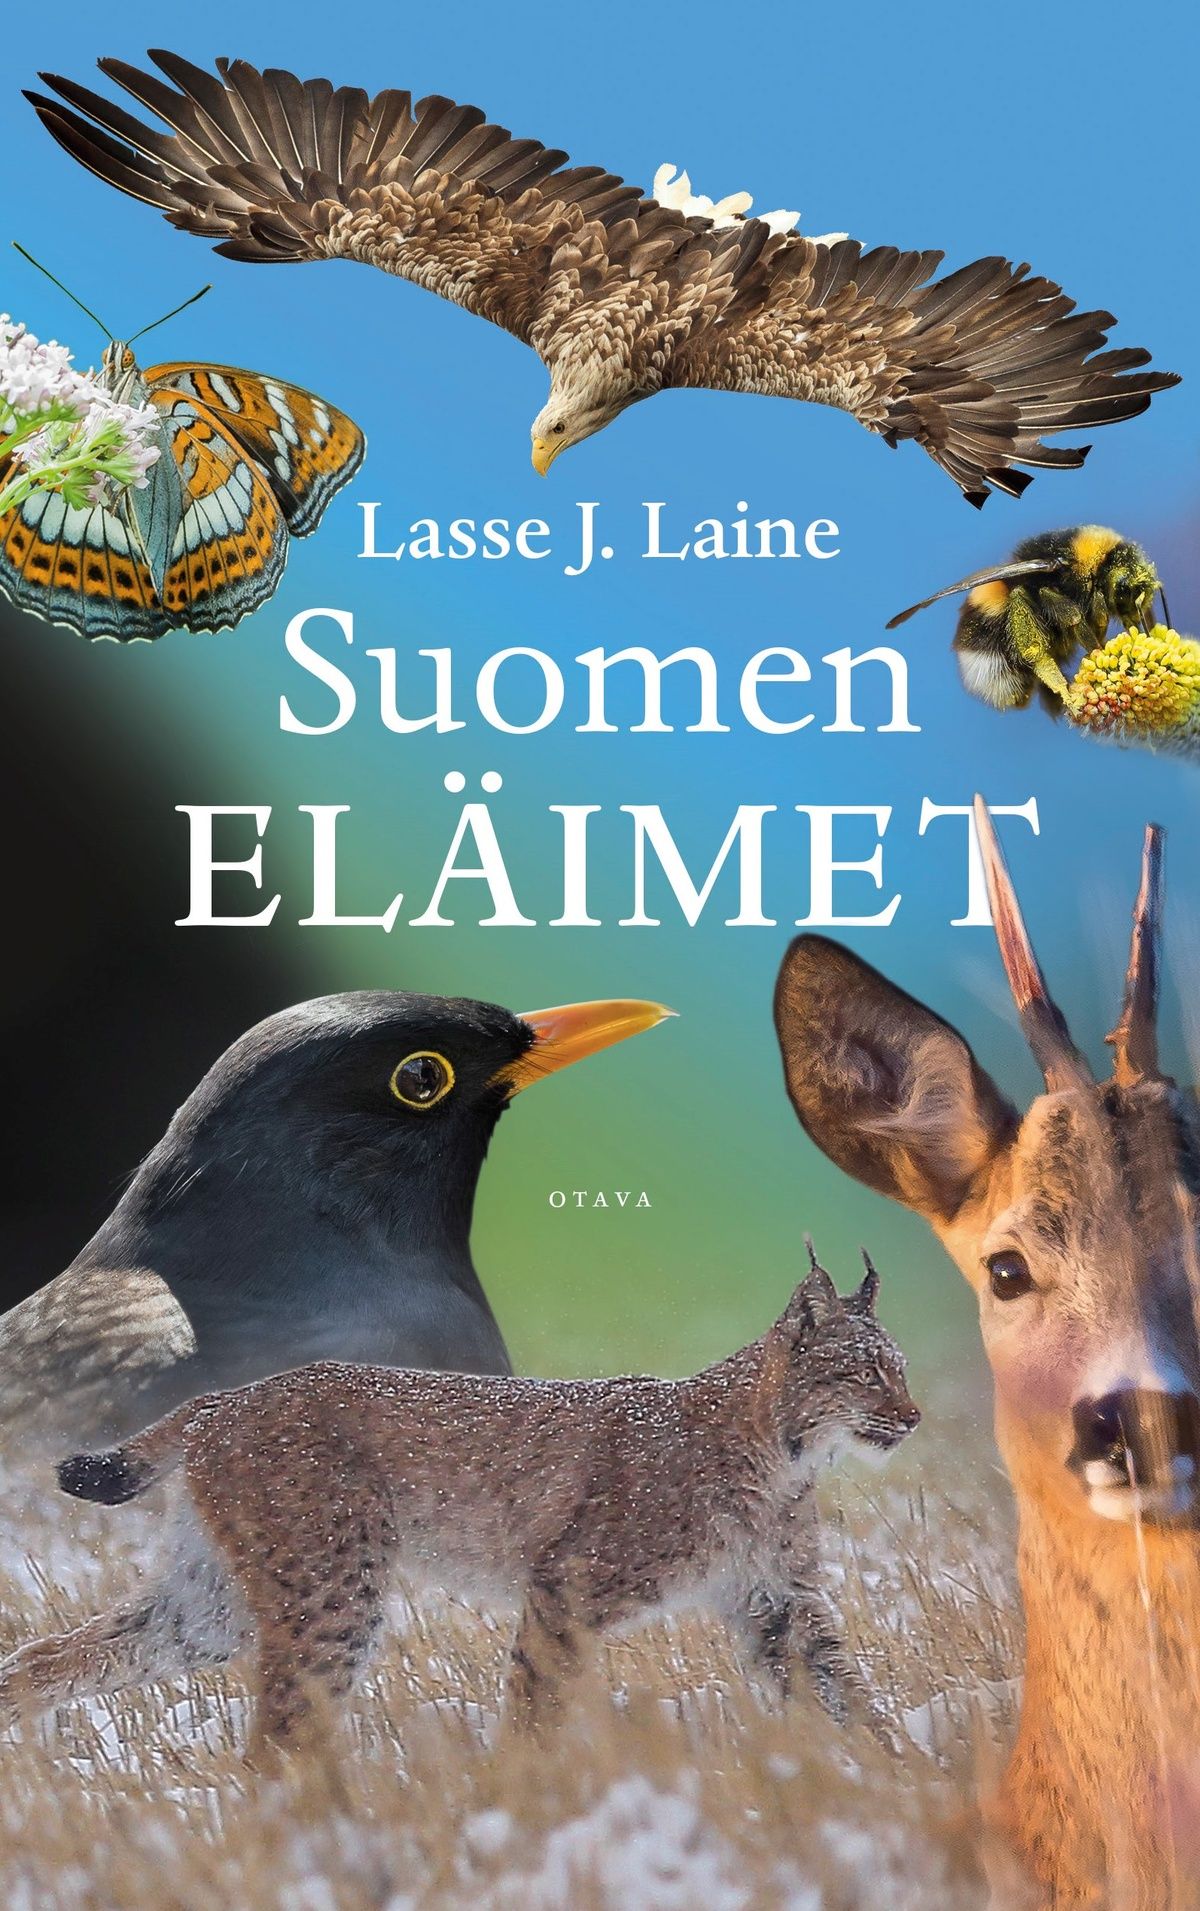 Lasse J. Laine : Suomen eläimet